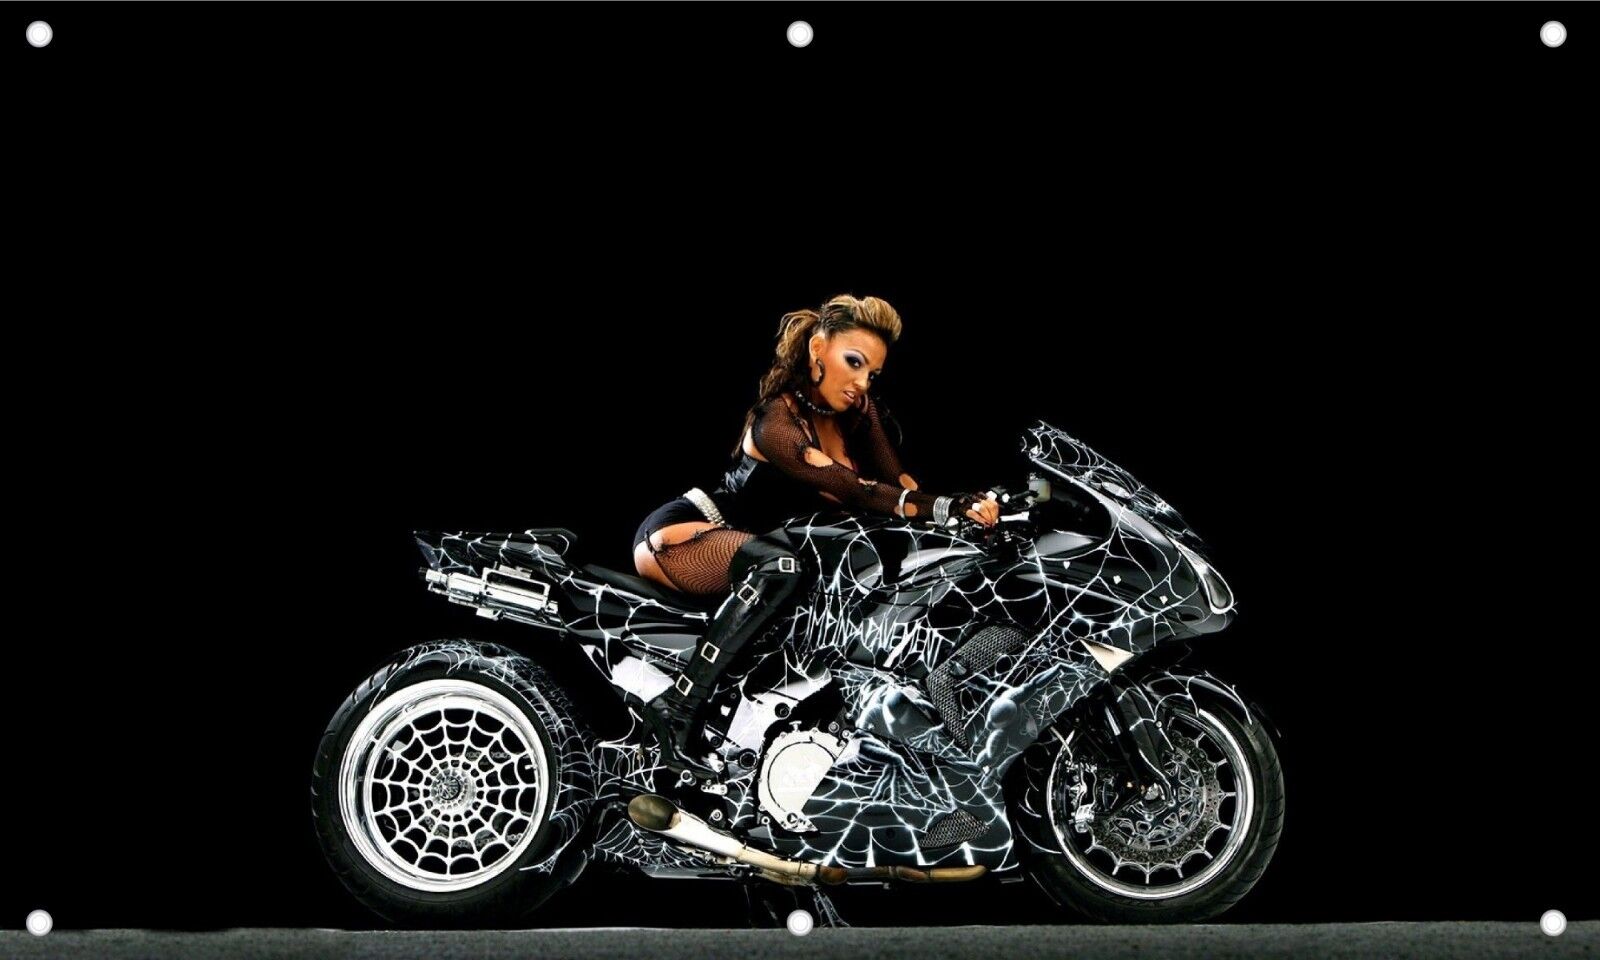 Hot Motorcycle Hot Chick 3'X5' VINYL BANNER MAN CAVE GARAGE SIGN MECHANIC SHOP 